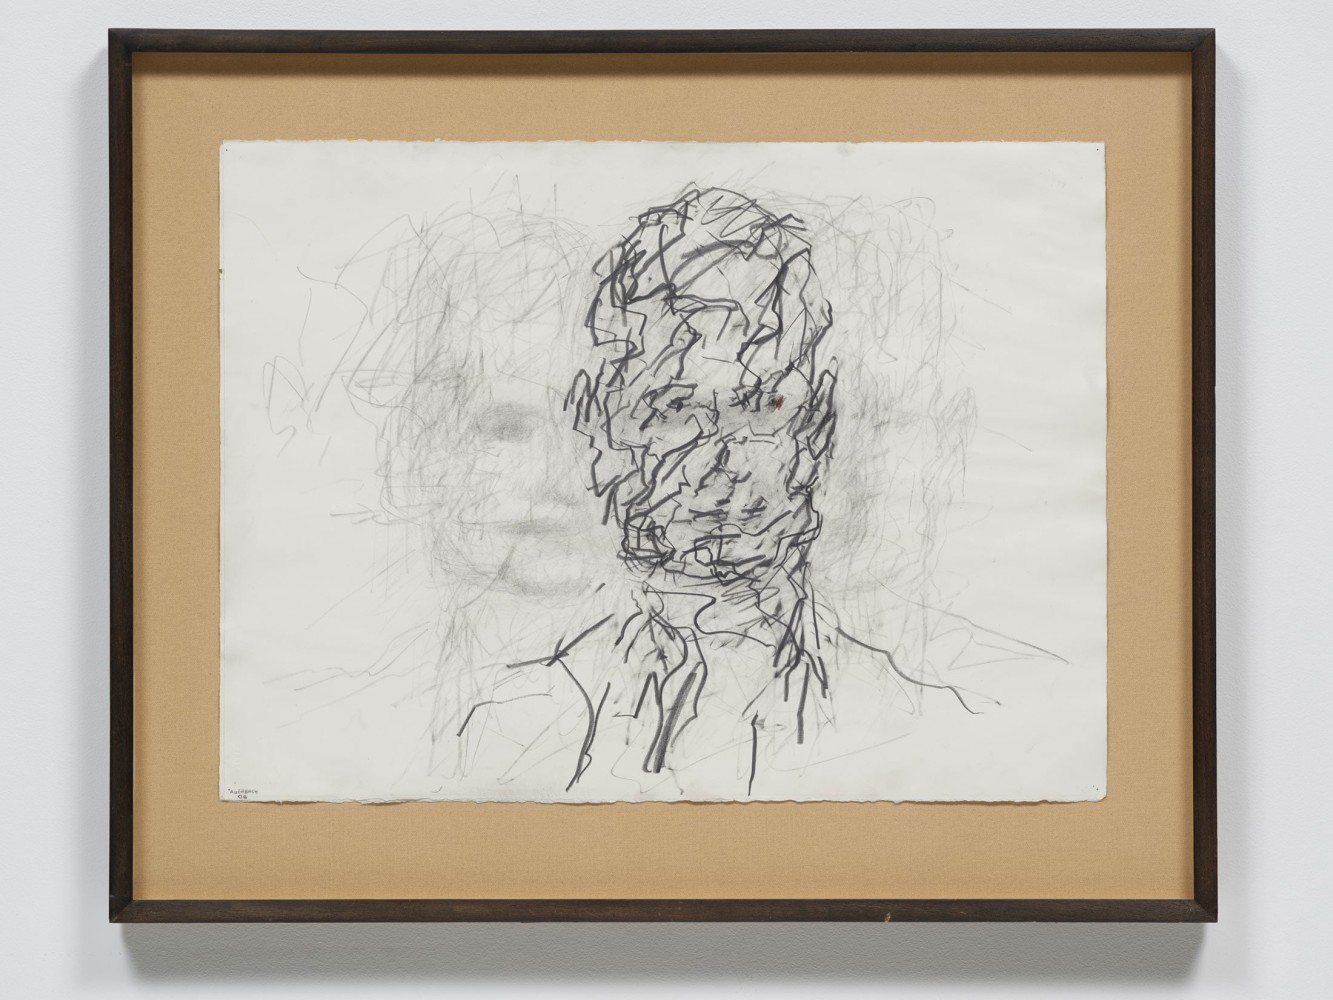 Frank Auerbach
Head of David Landau, 2006
Pencil and graphite on paper
22 1/2 x 30 1/4 inches
(57.2 x 76.8 cm)

Private Collection, Devon